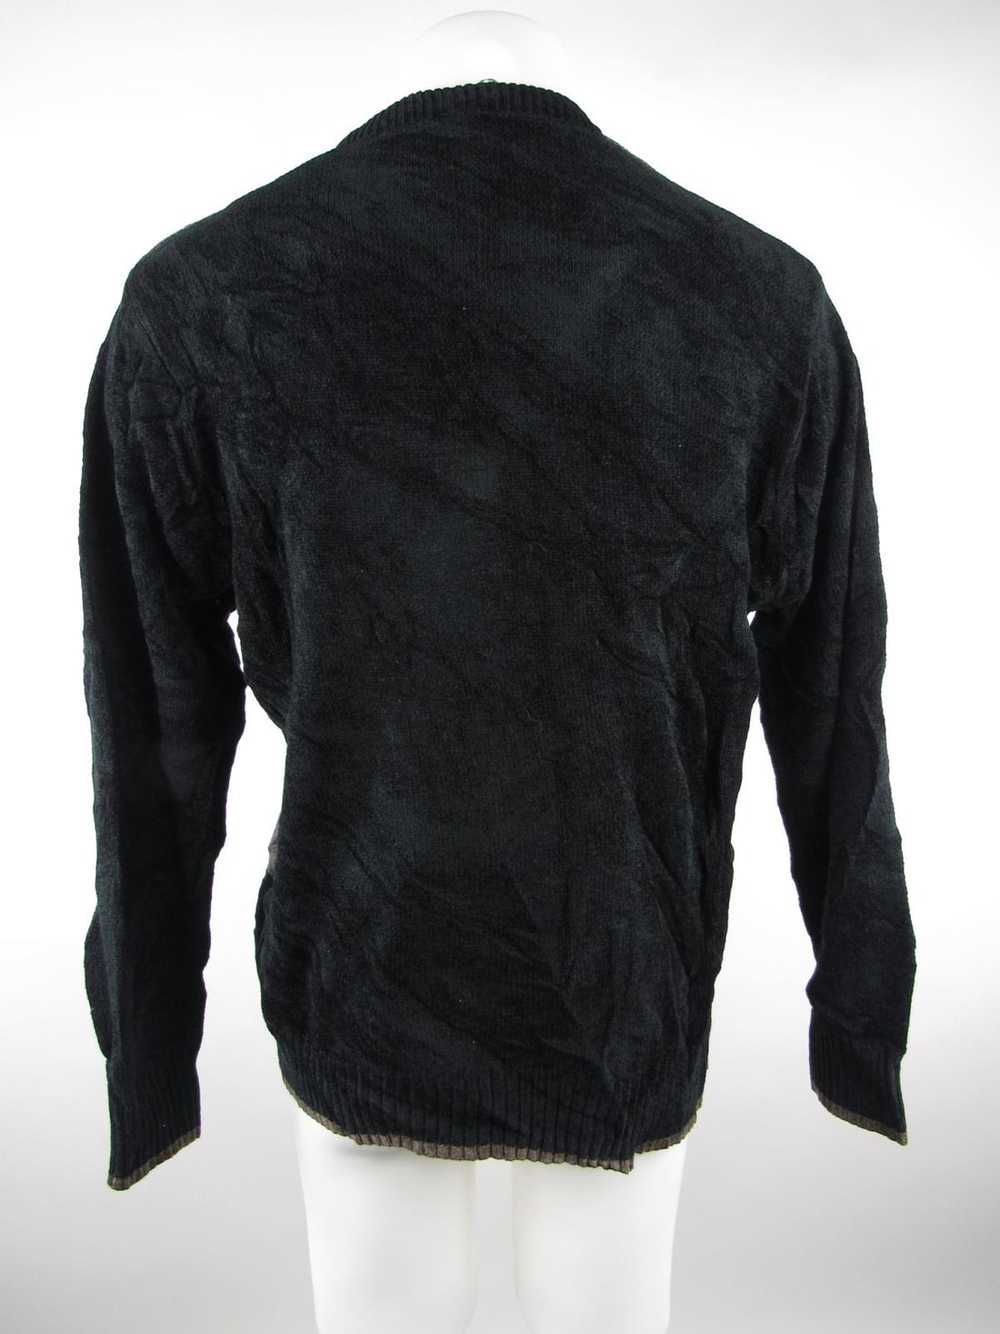 David Taylor Collection Crewneck Sweater - image 2